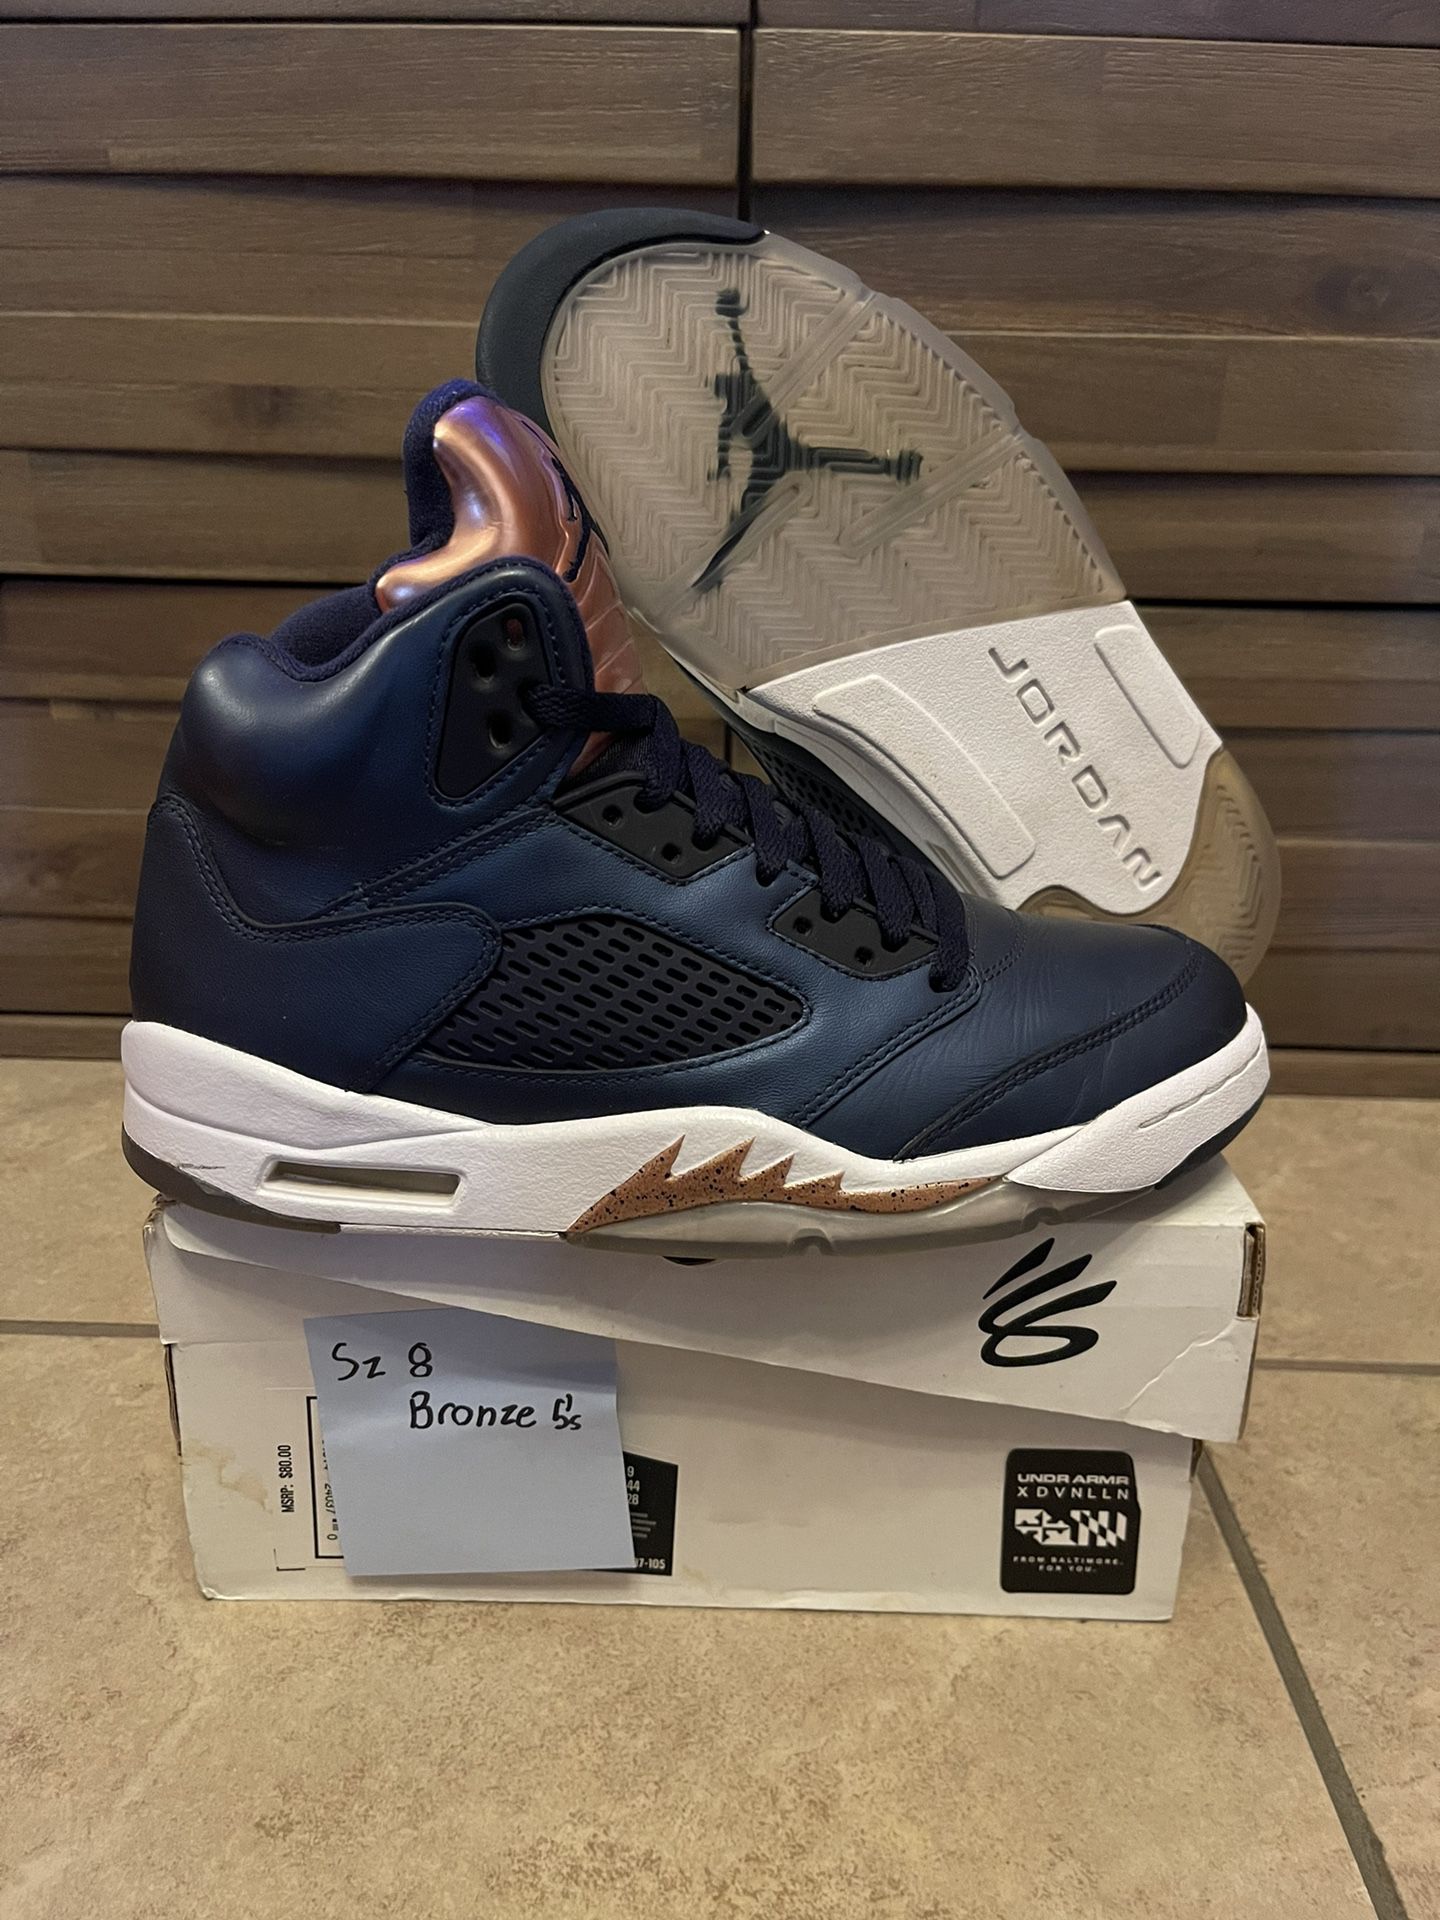 Air Jordan 5 “Bronze” Size 8